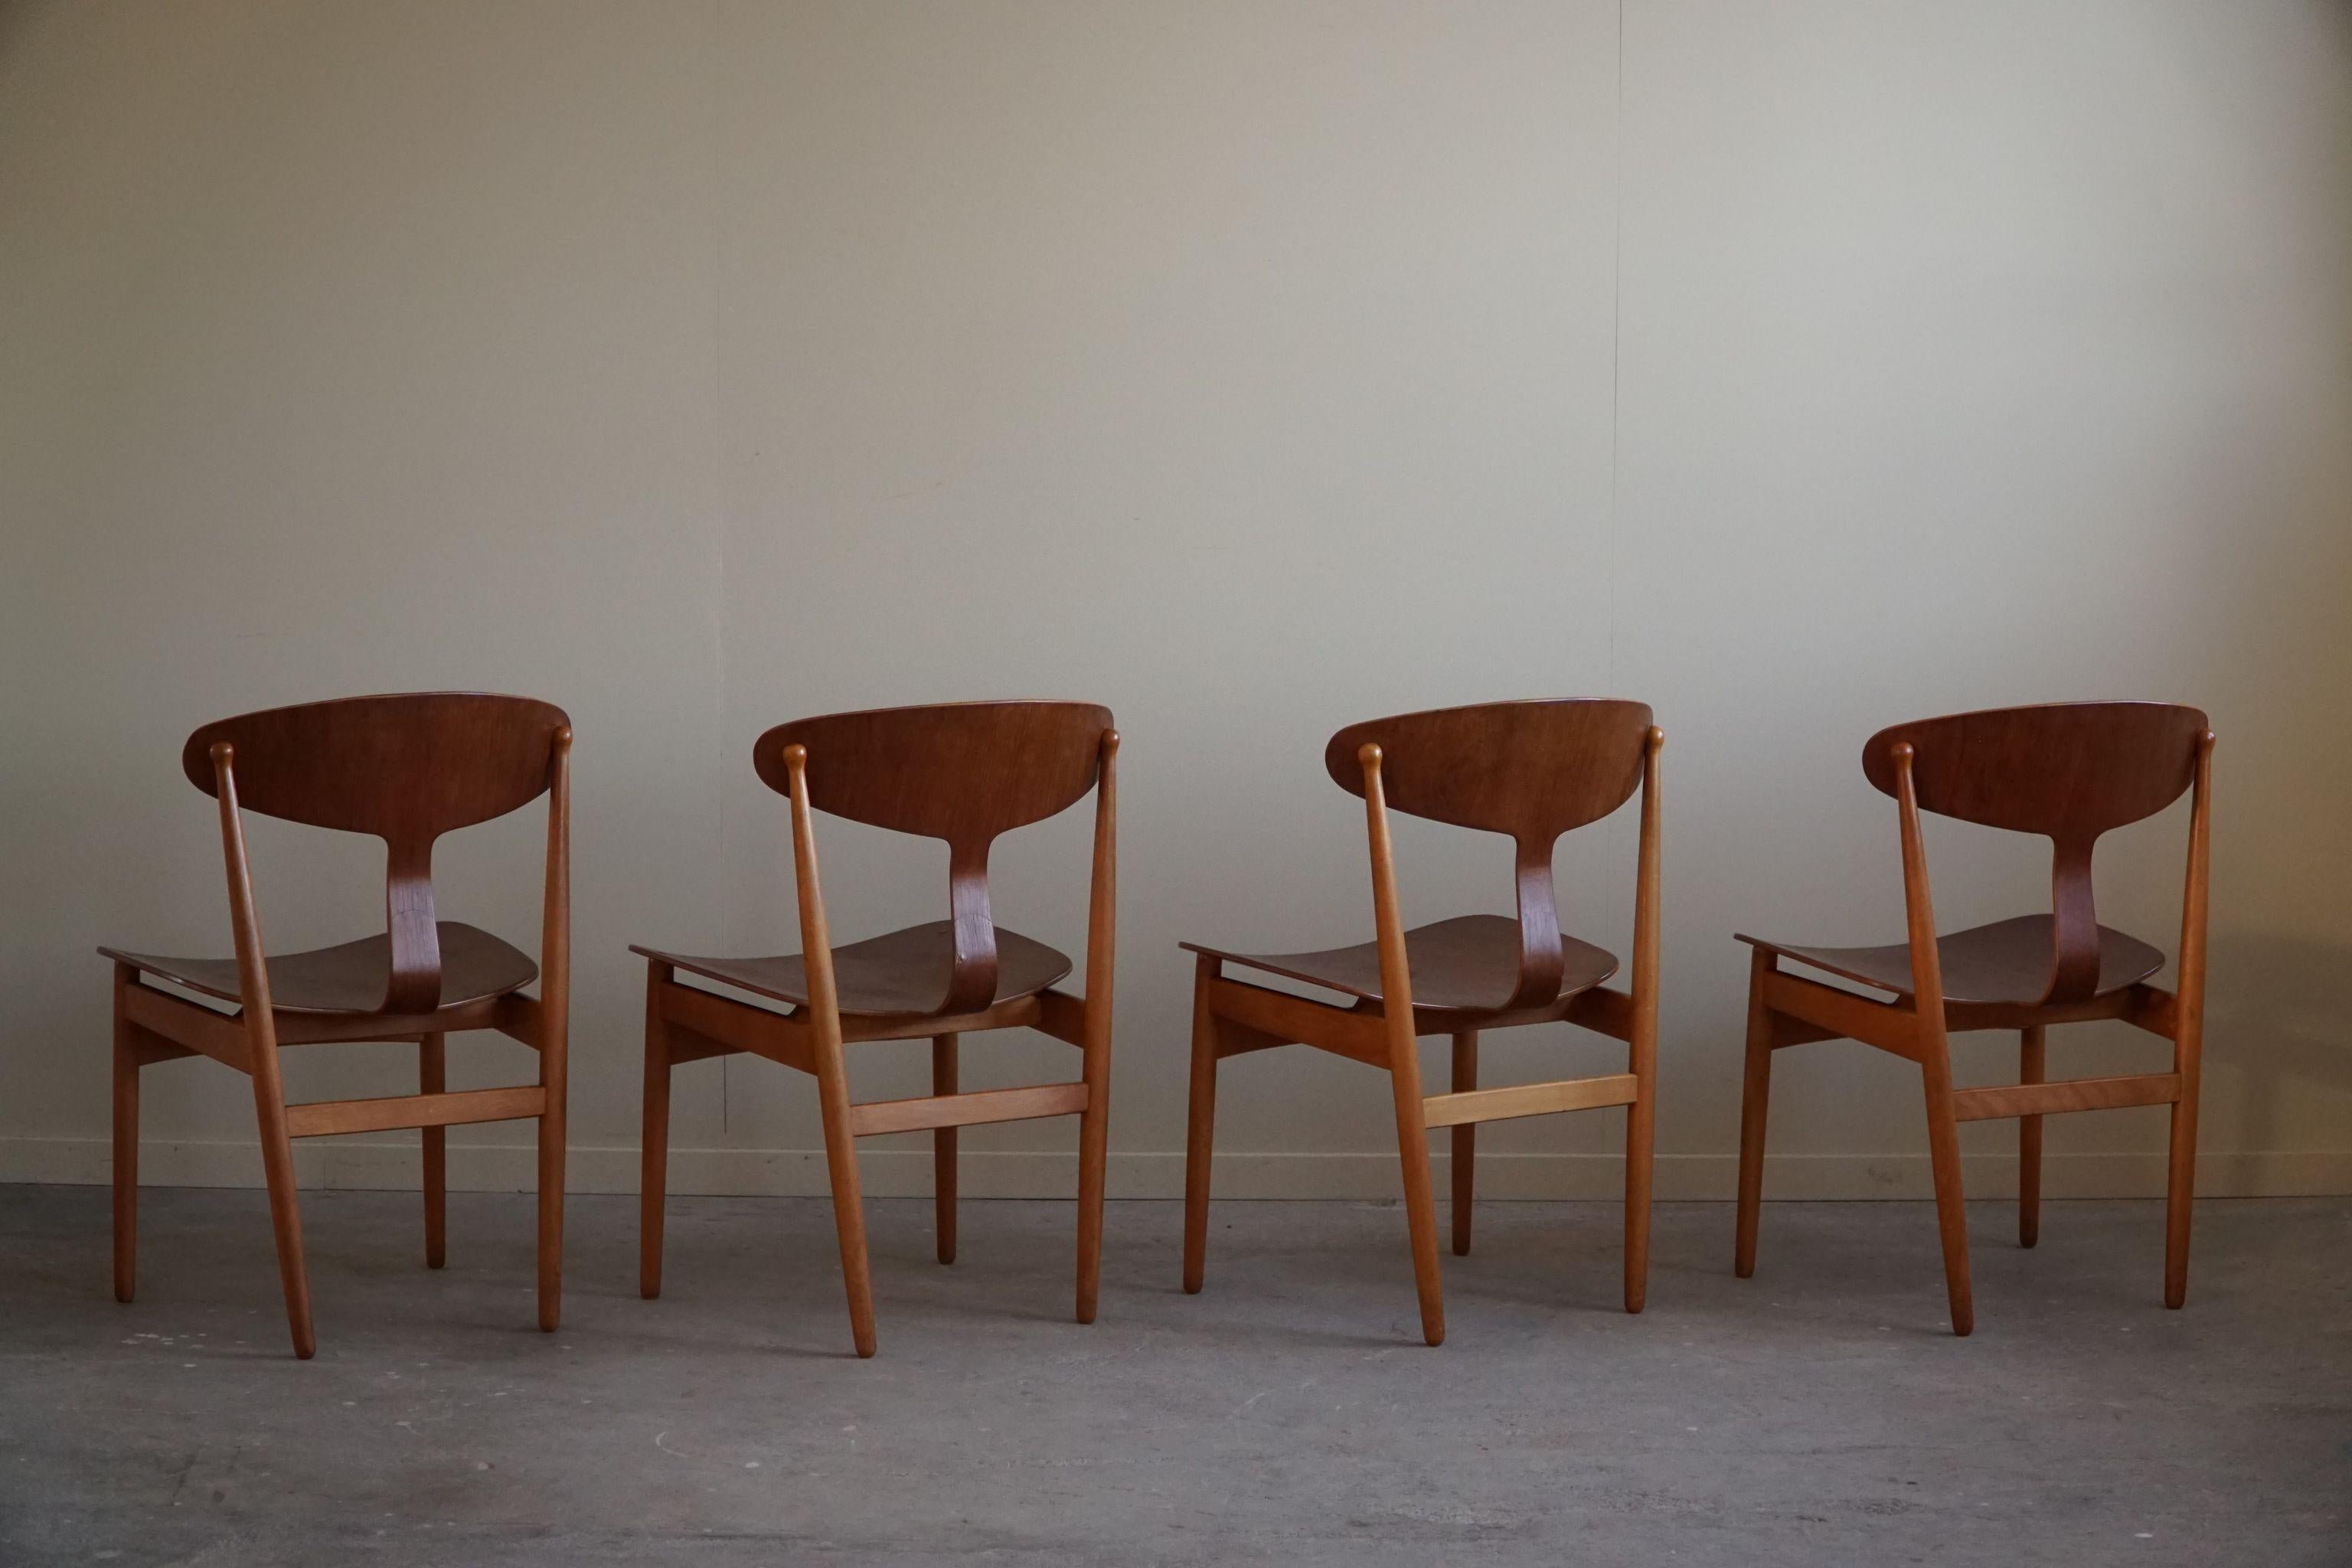 20th Century Ejner Larsen & Aksel Bender Madsen, Set of 4 Chairs, Danish Mid Century, 1954 For Sale